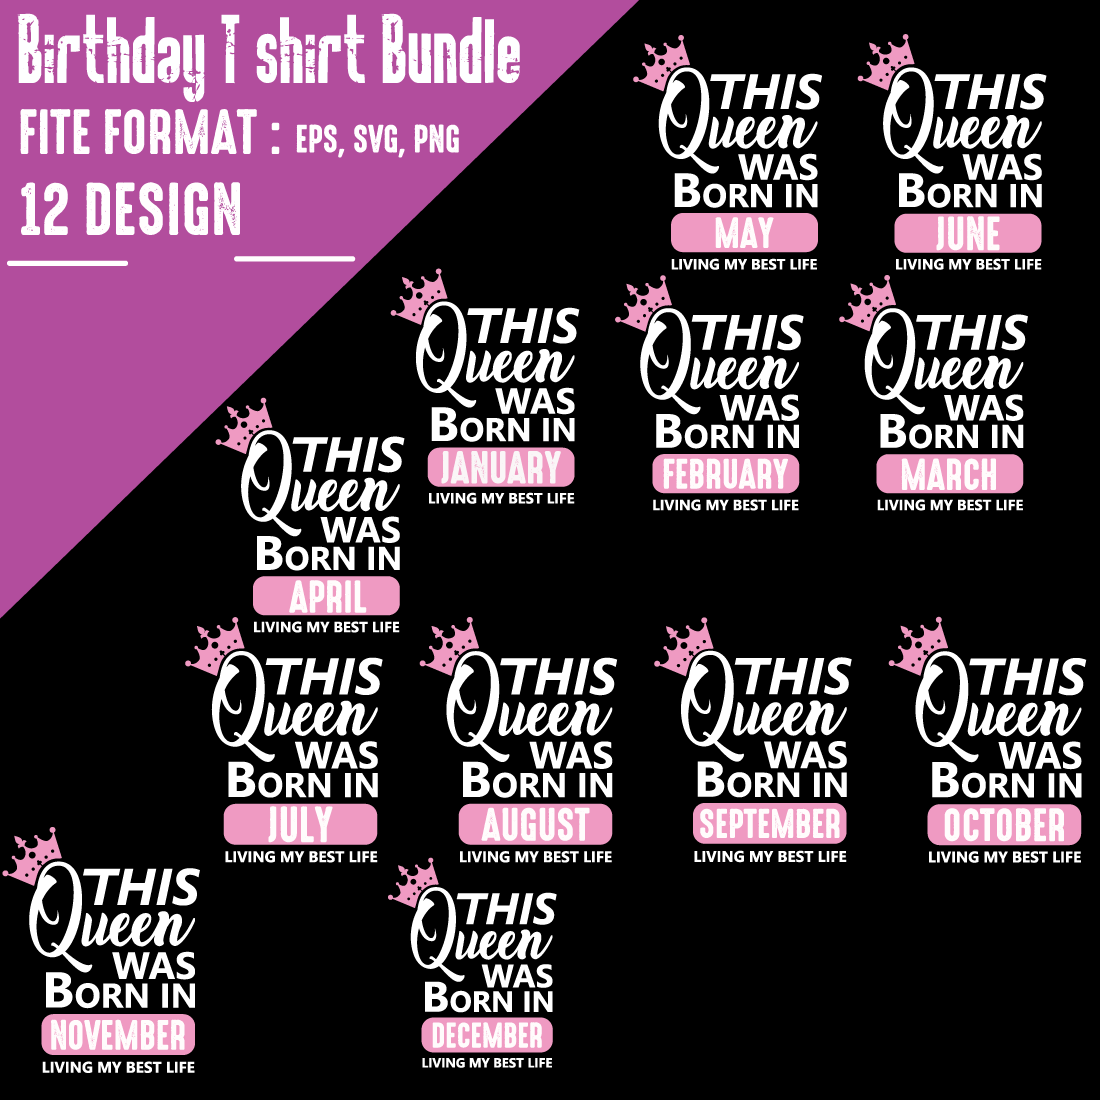 Happy Birthday SVG Bundle Hand Lettered | Birthday SvG | Birthday Party SVG main cover.